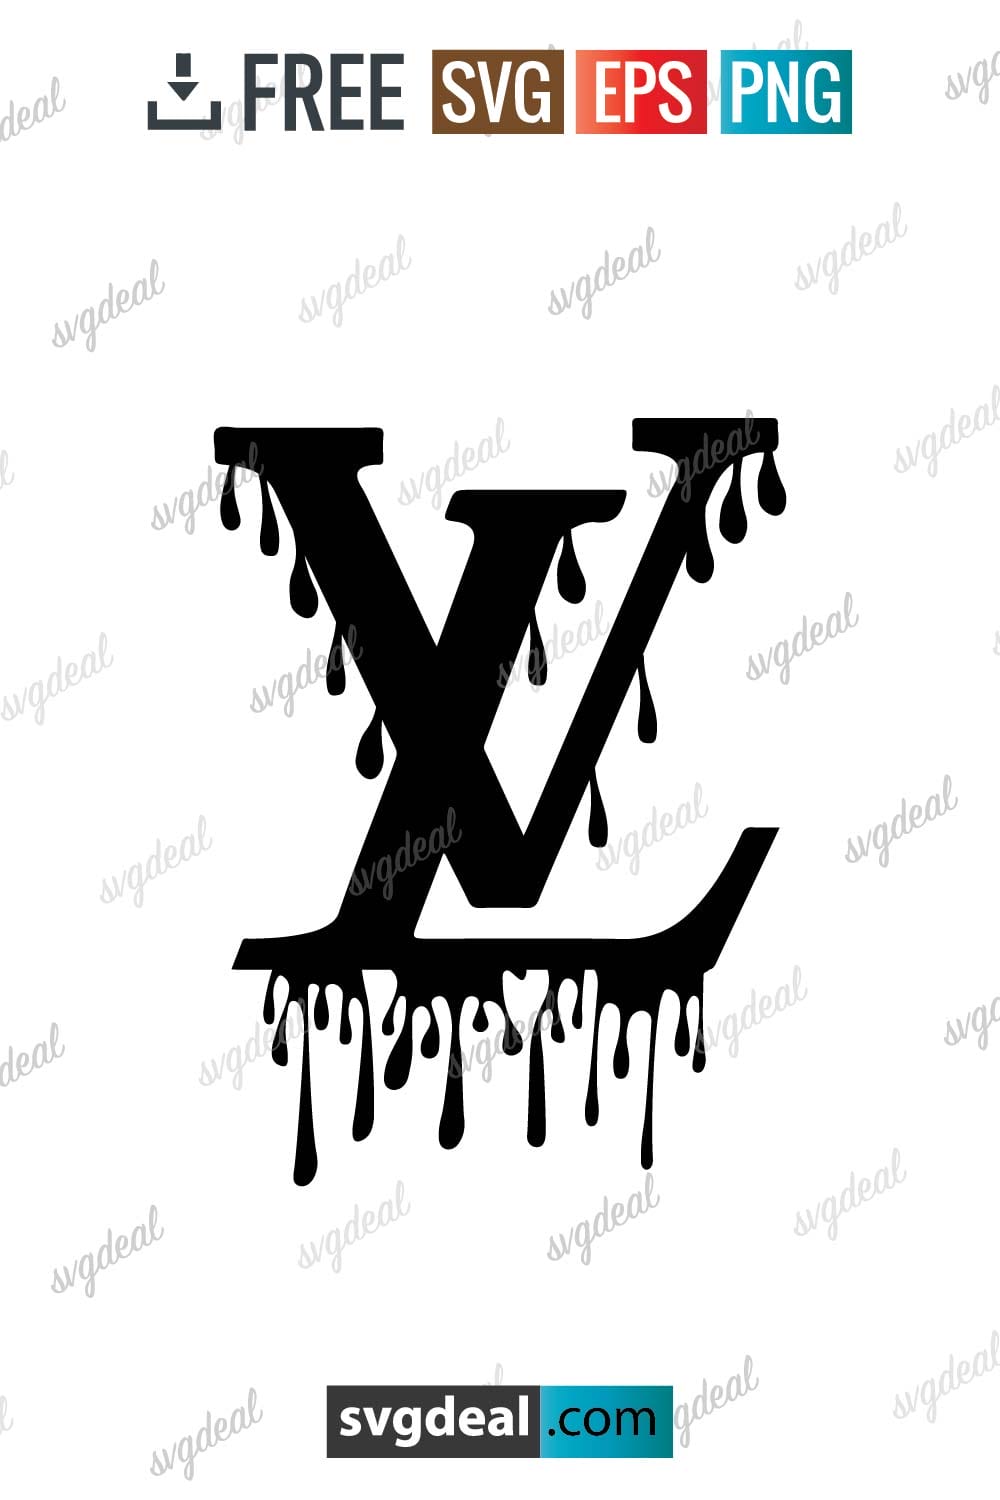 Louis Vuitton Drip Logo SVG - Free SVG Files